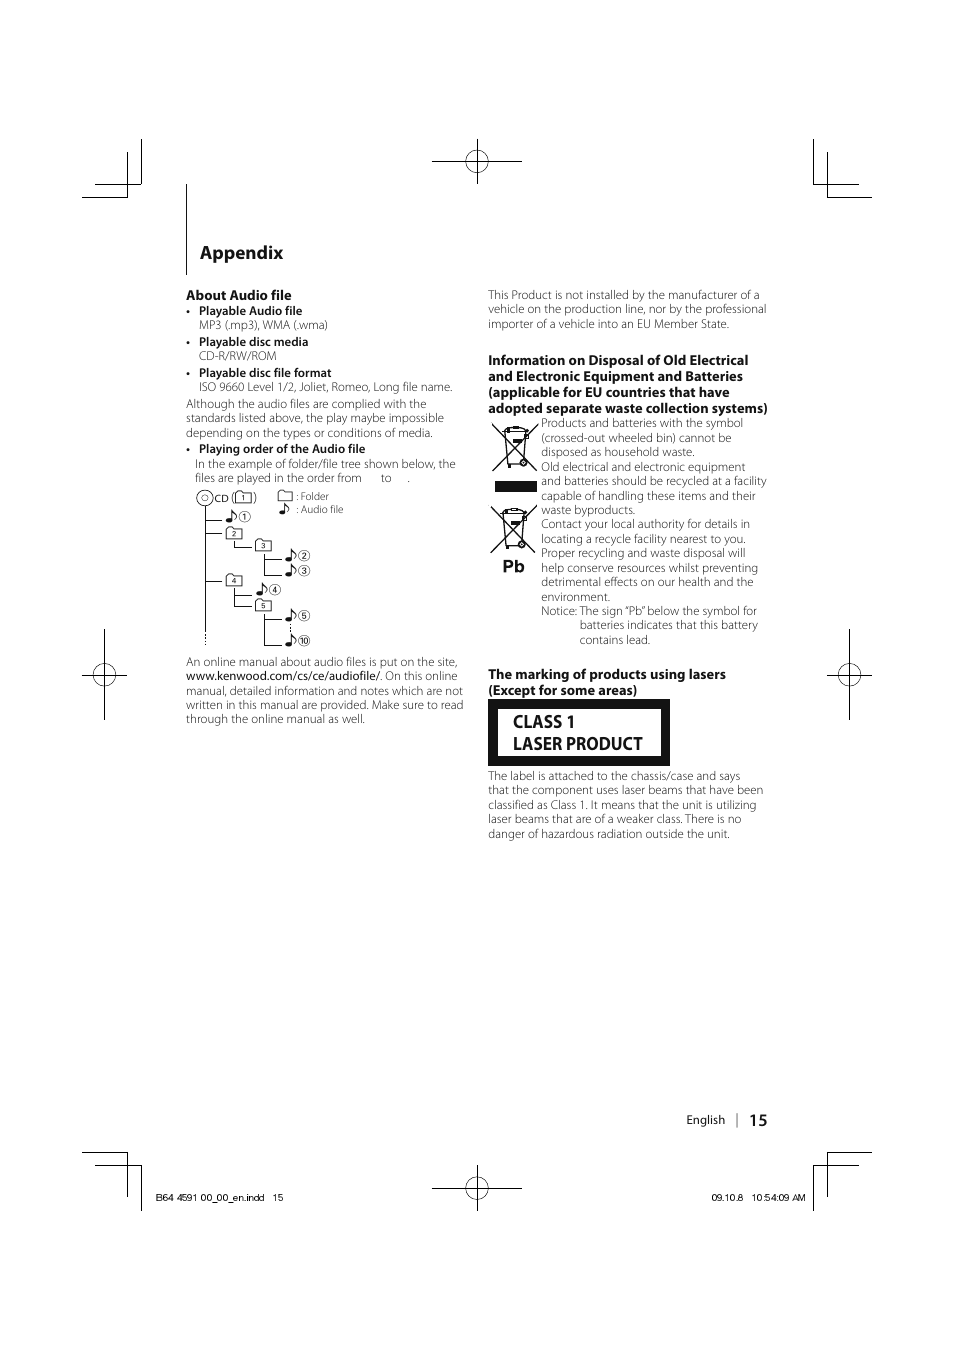 Appendix, Class 1 laser product | Kenwood KDC-314AM User Manual | Page 15 /  24 | Original mode